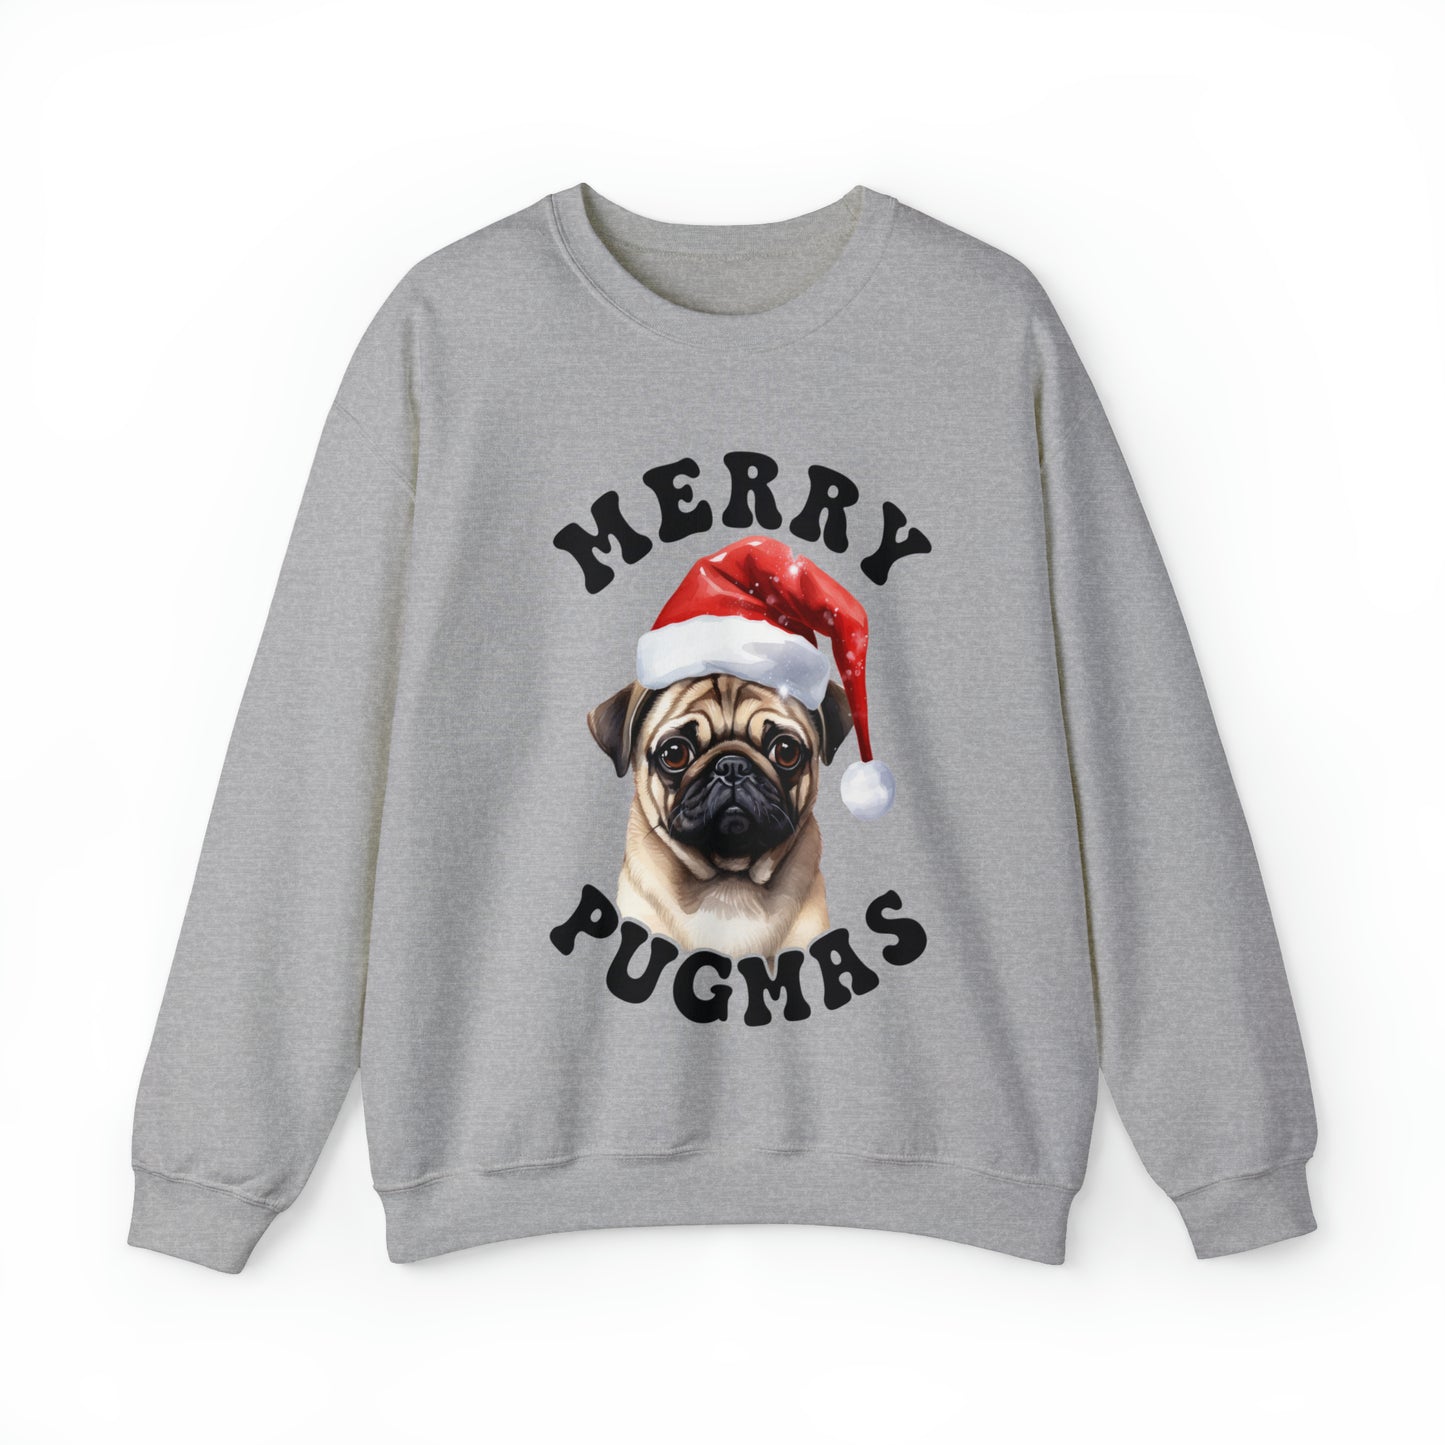 Merry Pugmas Adult Unisex Christmas Crewneck Sweatshirt